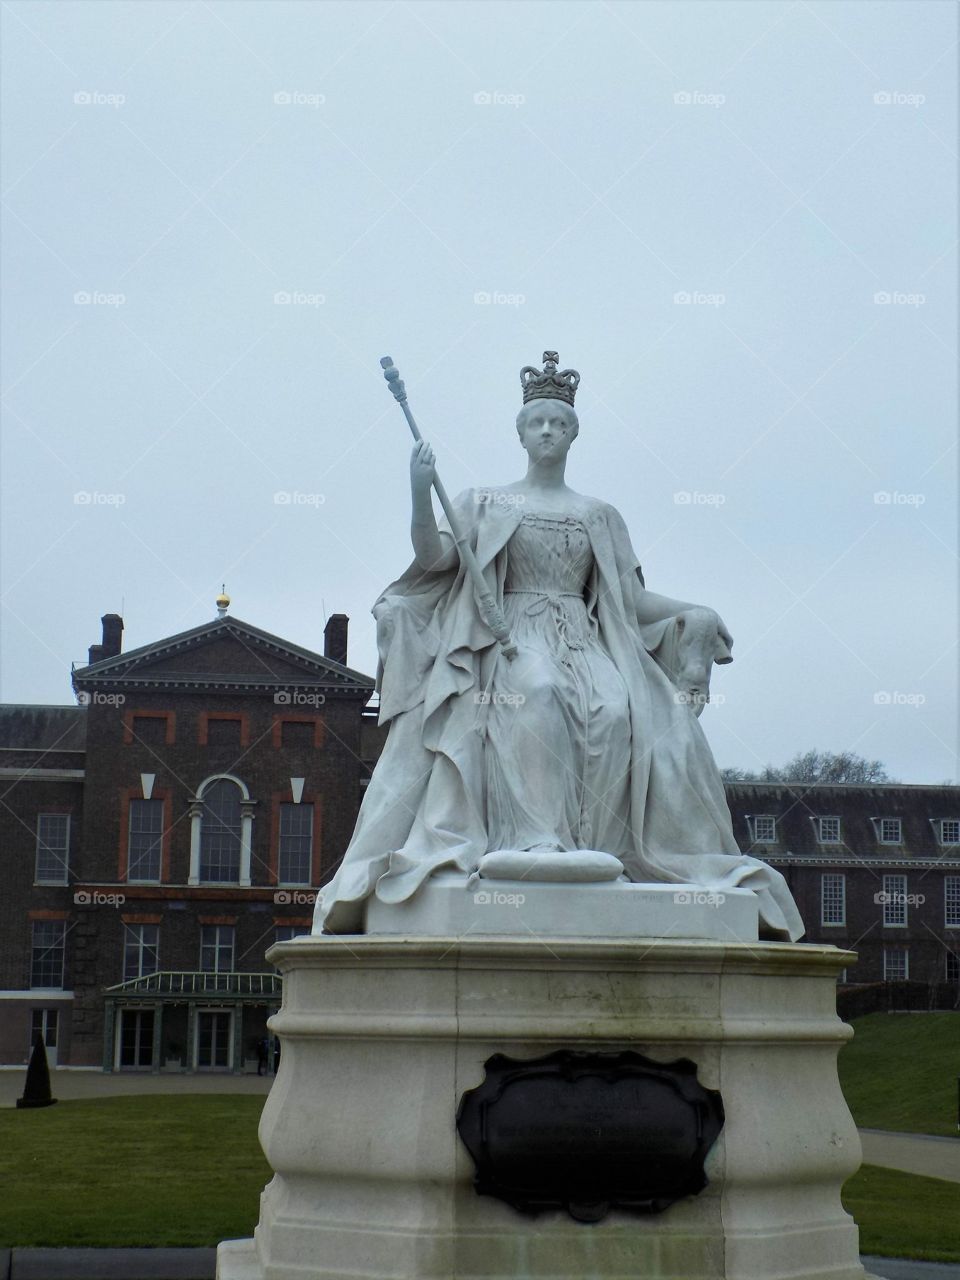 Royal places) Kensington palace